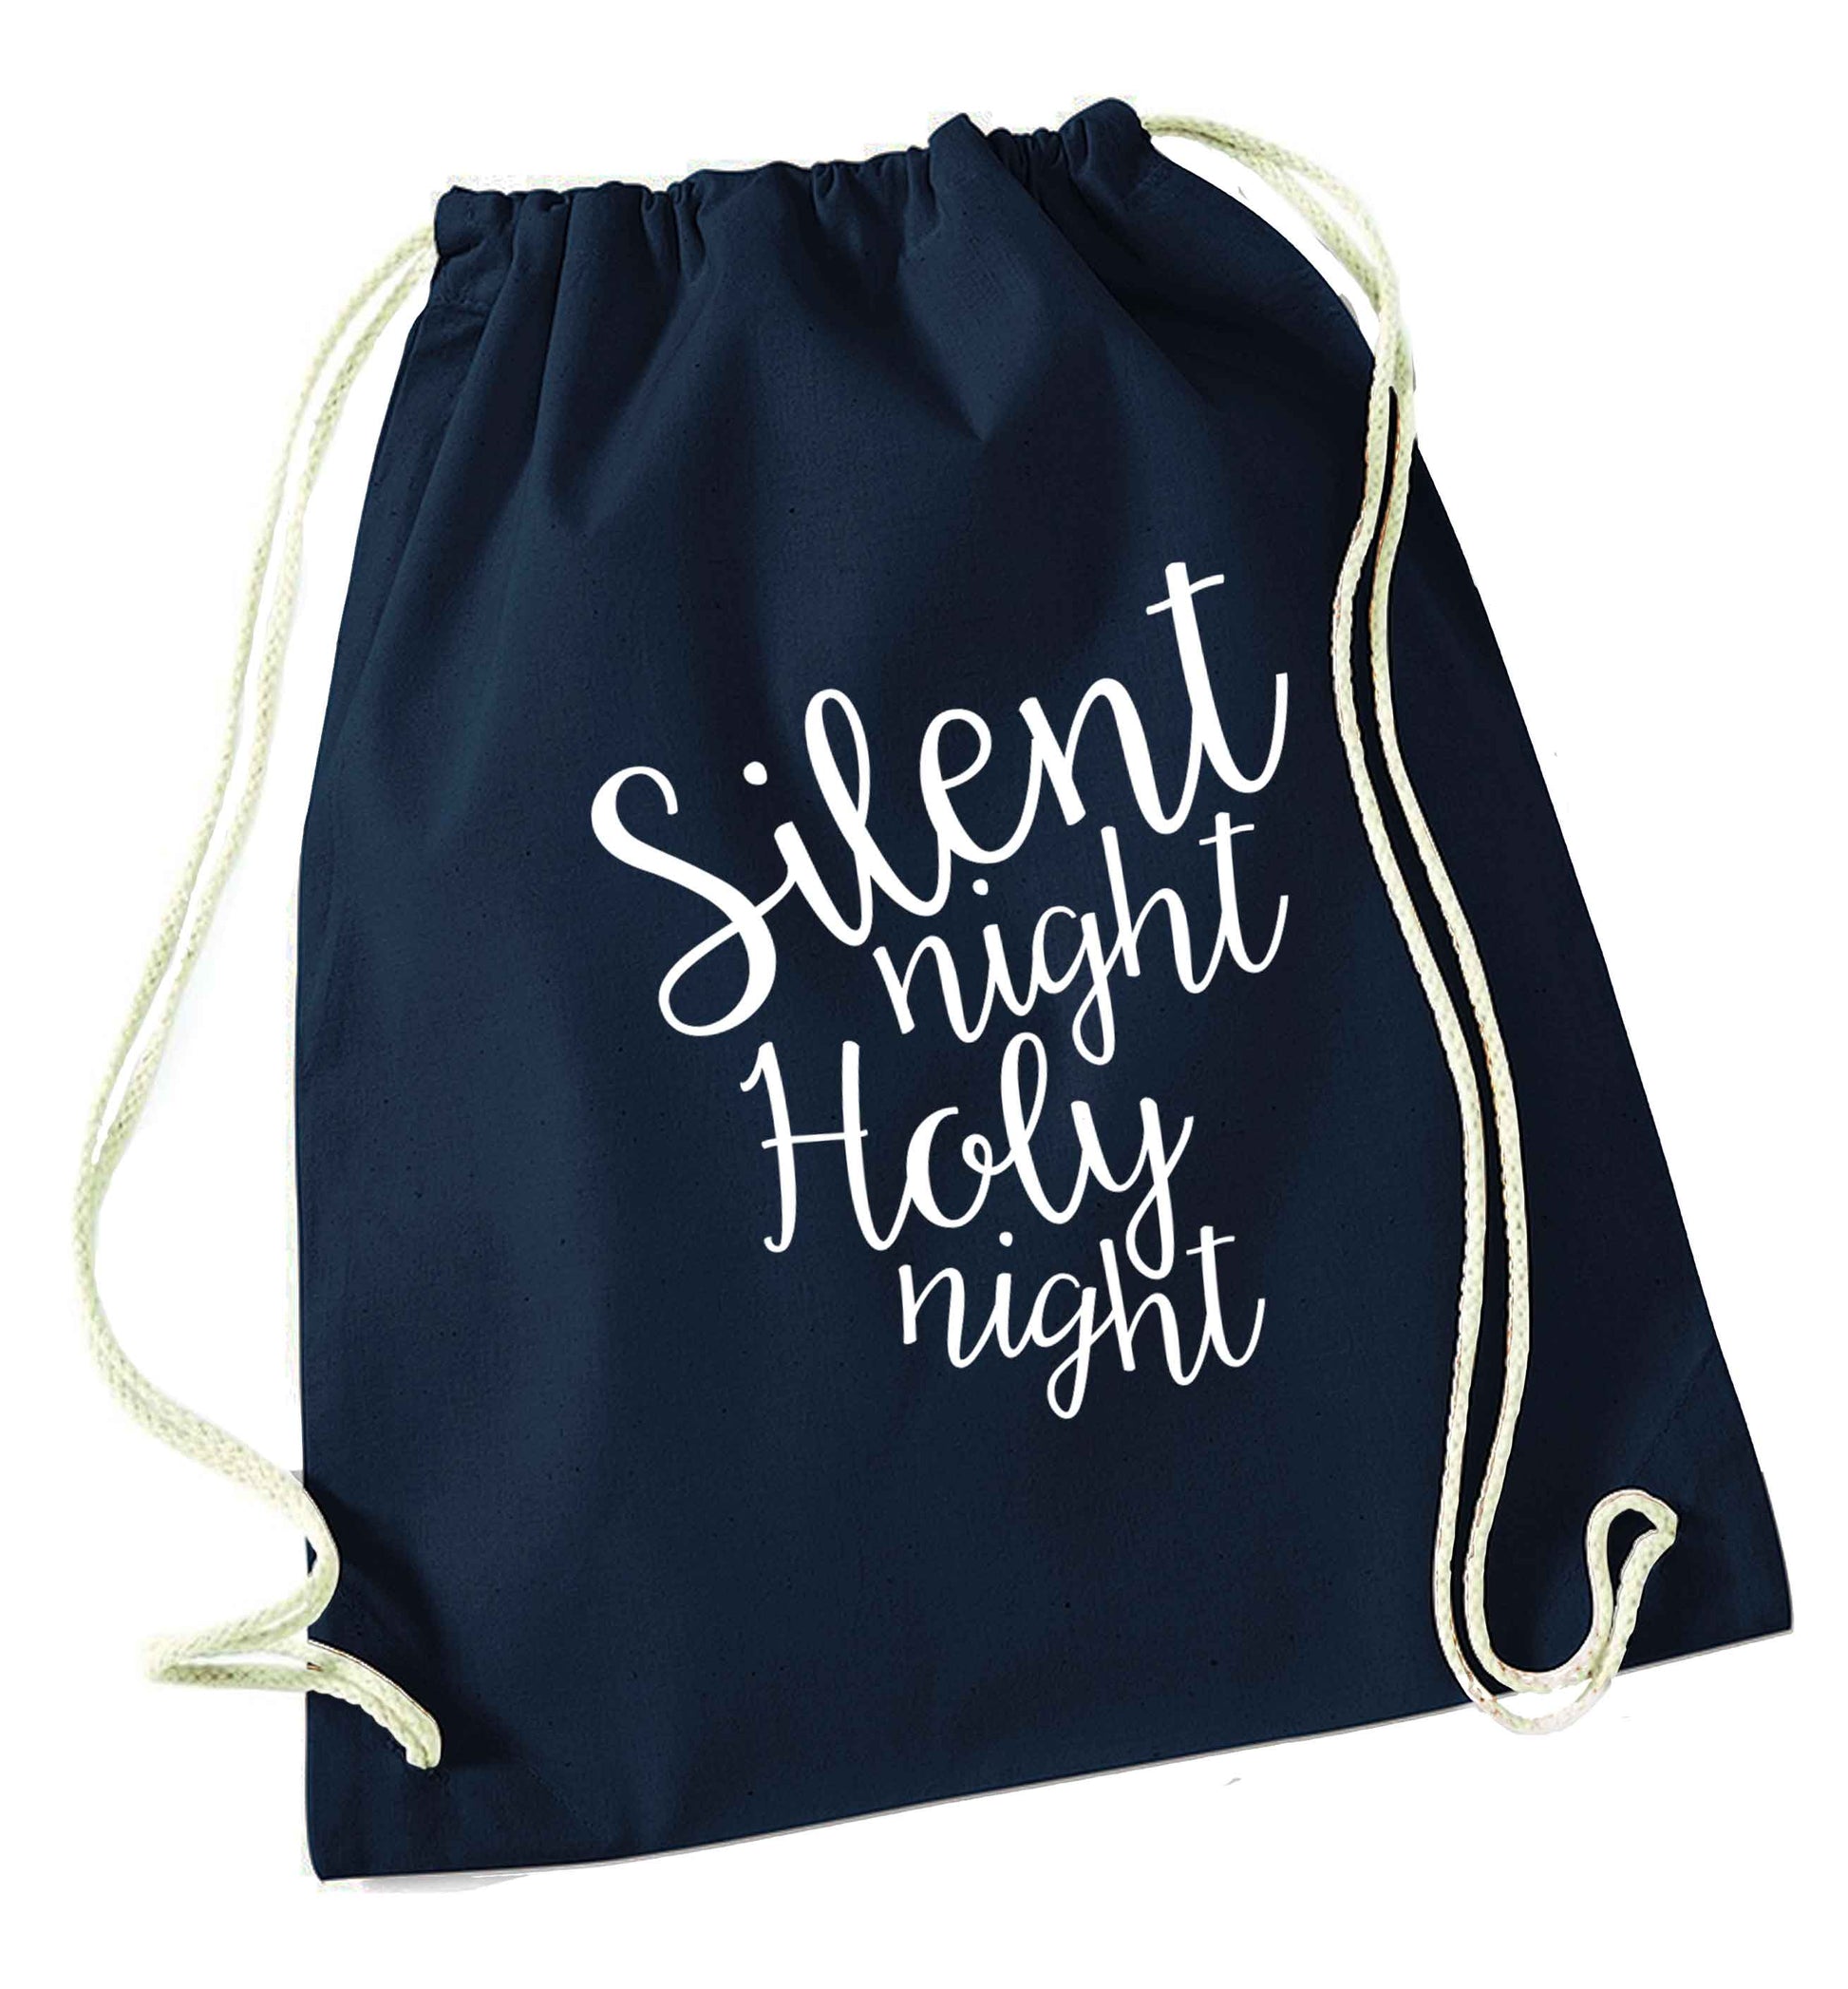 Silent night holy night navy drawstring bag